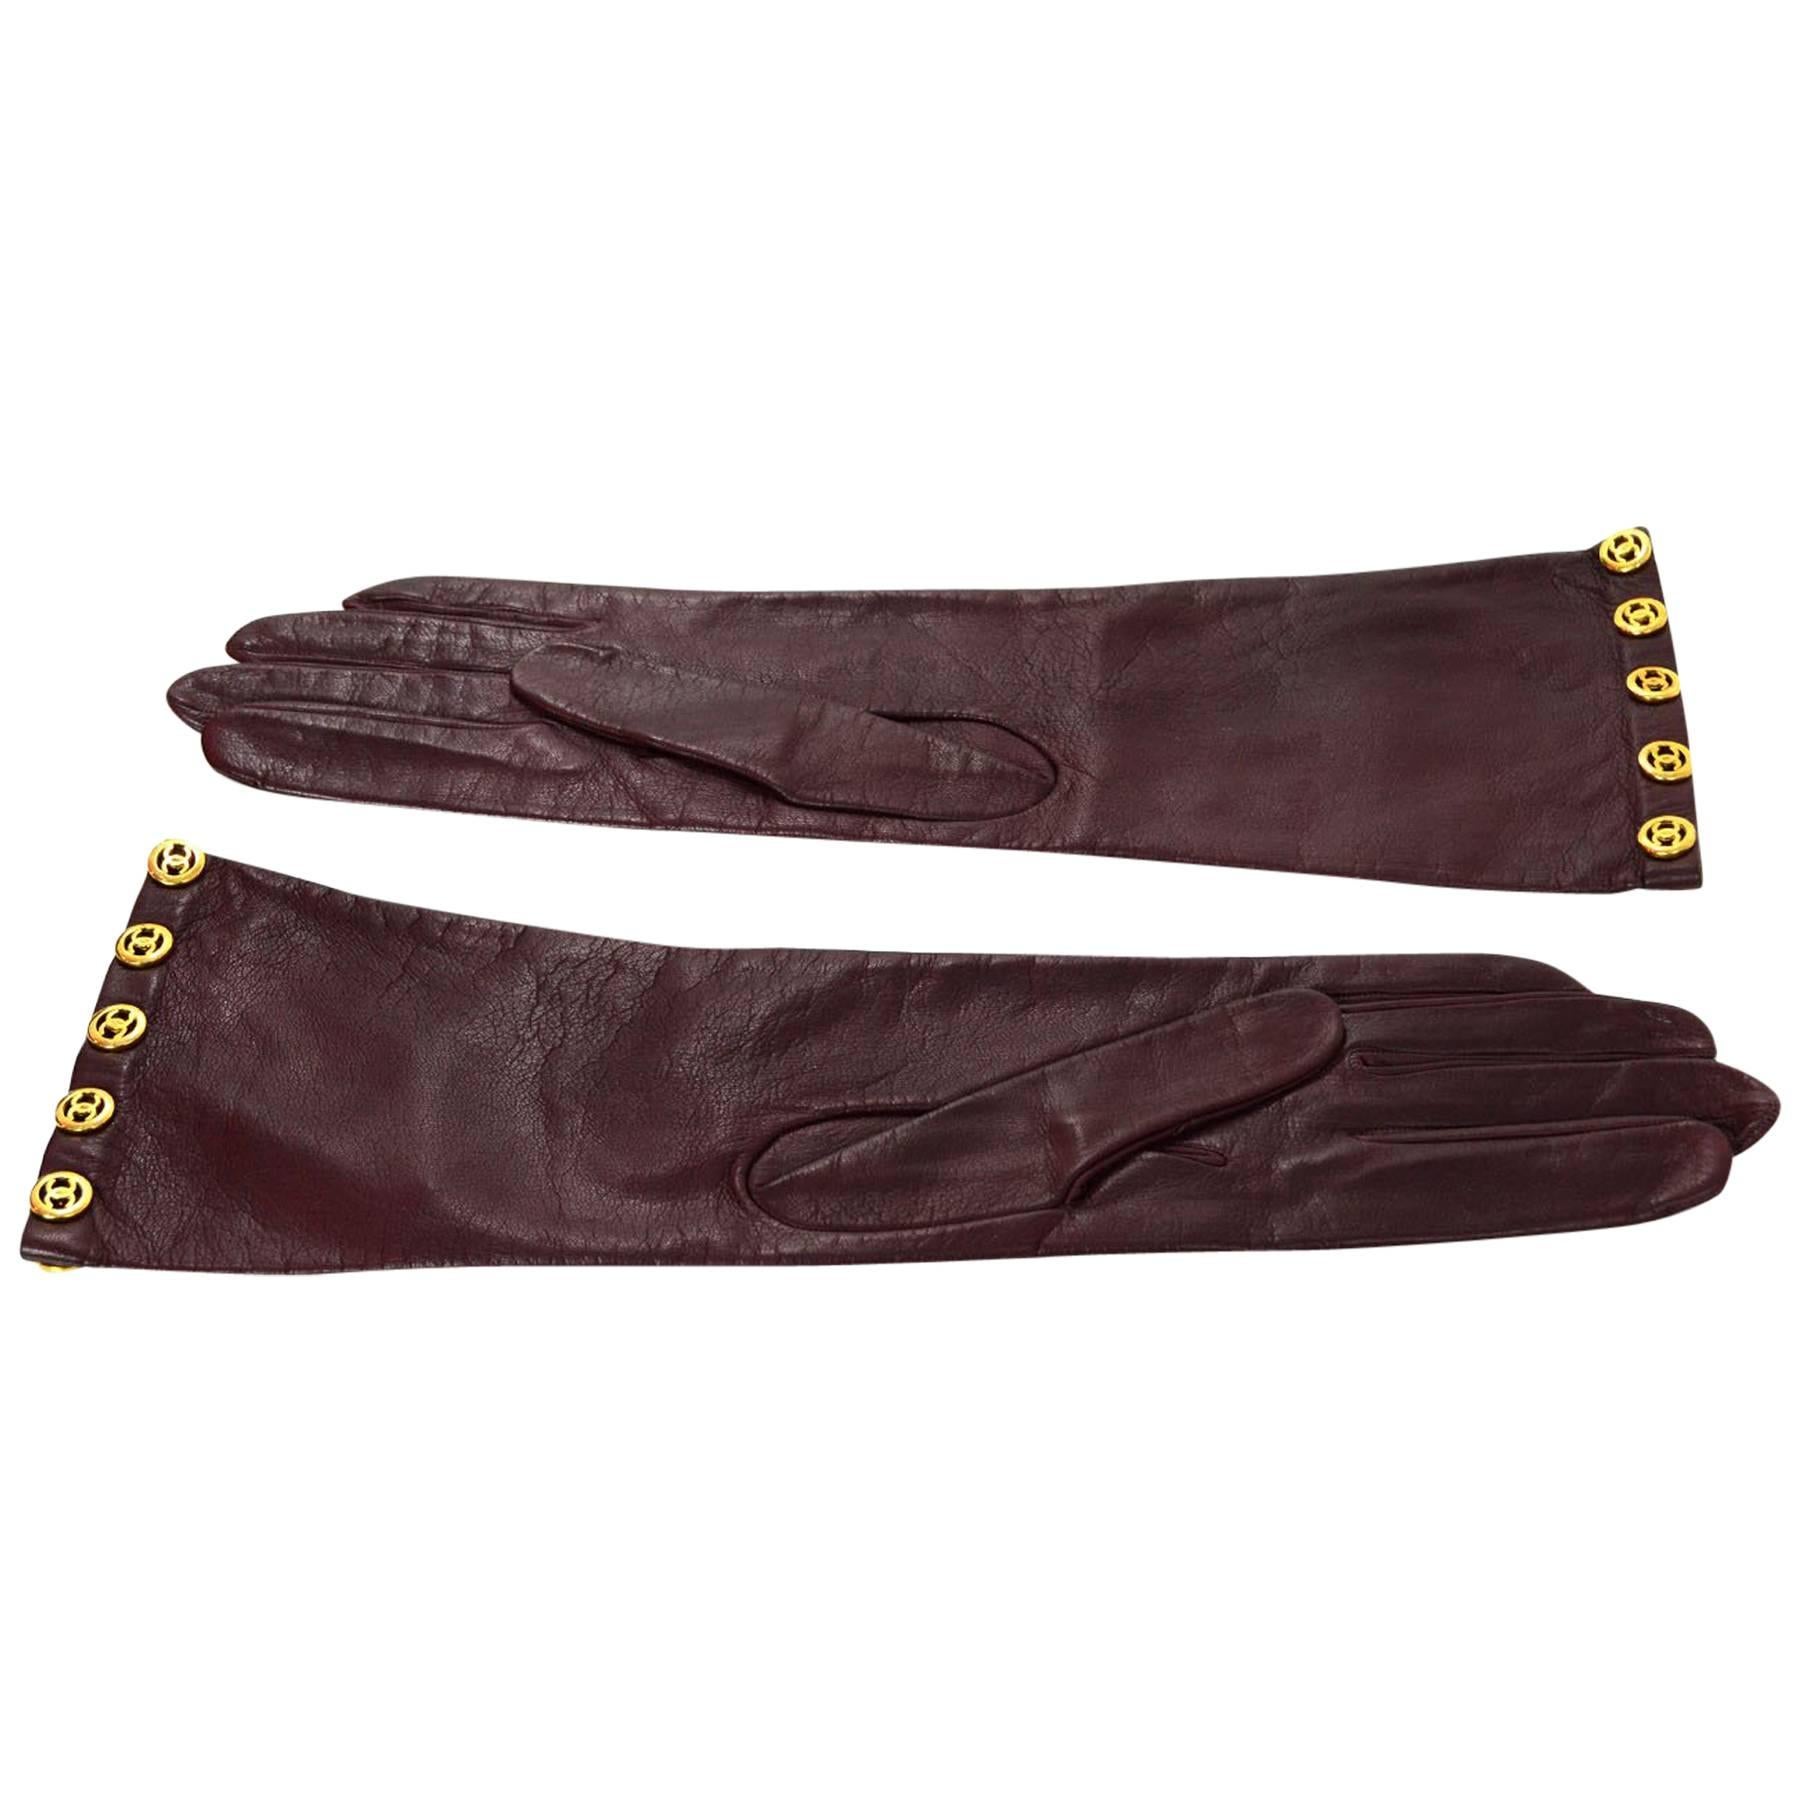 Chanel Burgundy Leather Long Gloves w/ CC Button Trim Sz 7.5